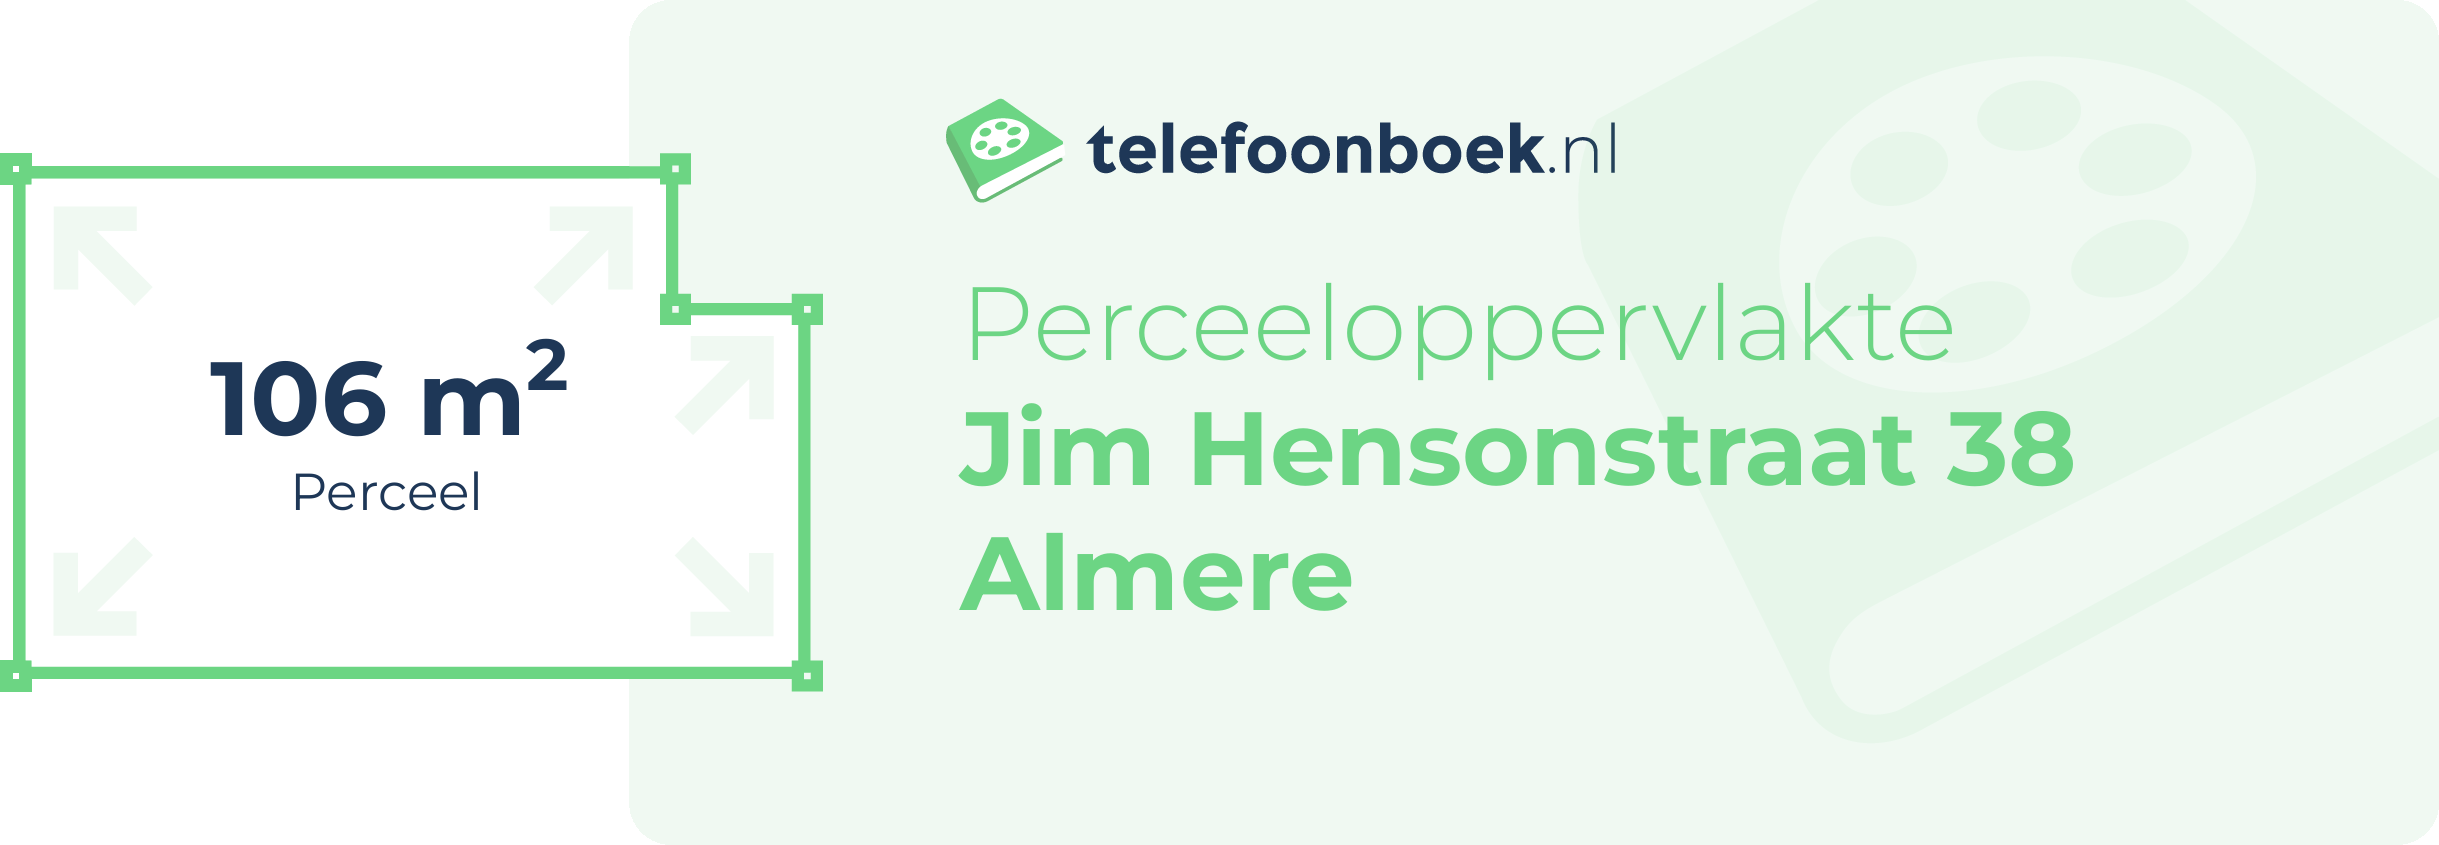 Perceeloppervlakte Jim Hensonstraat 38 Almere